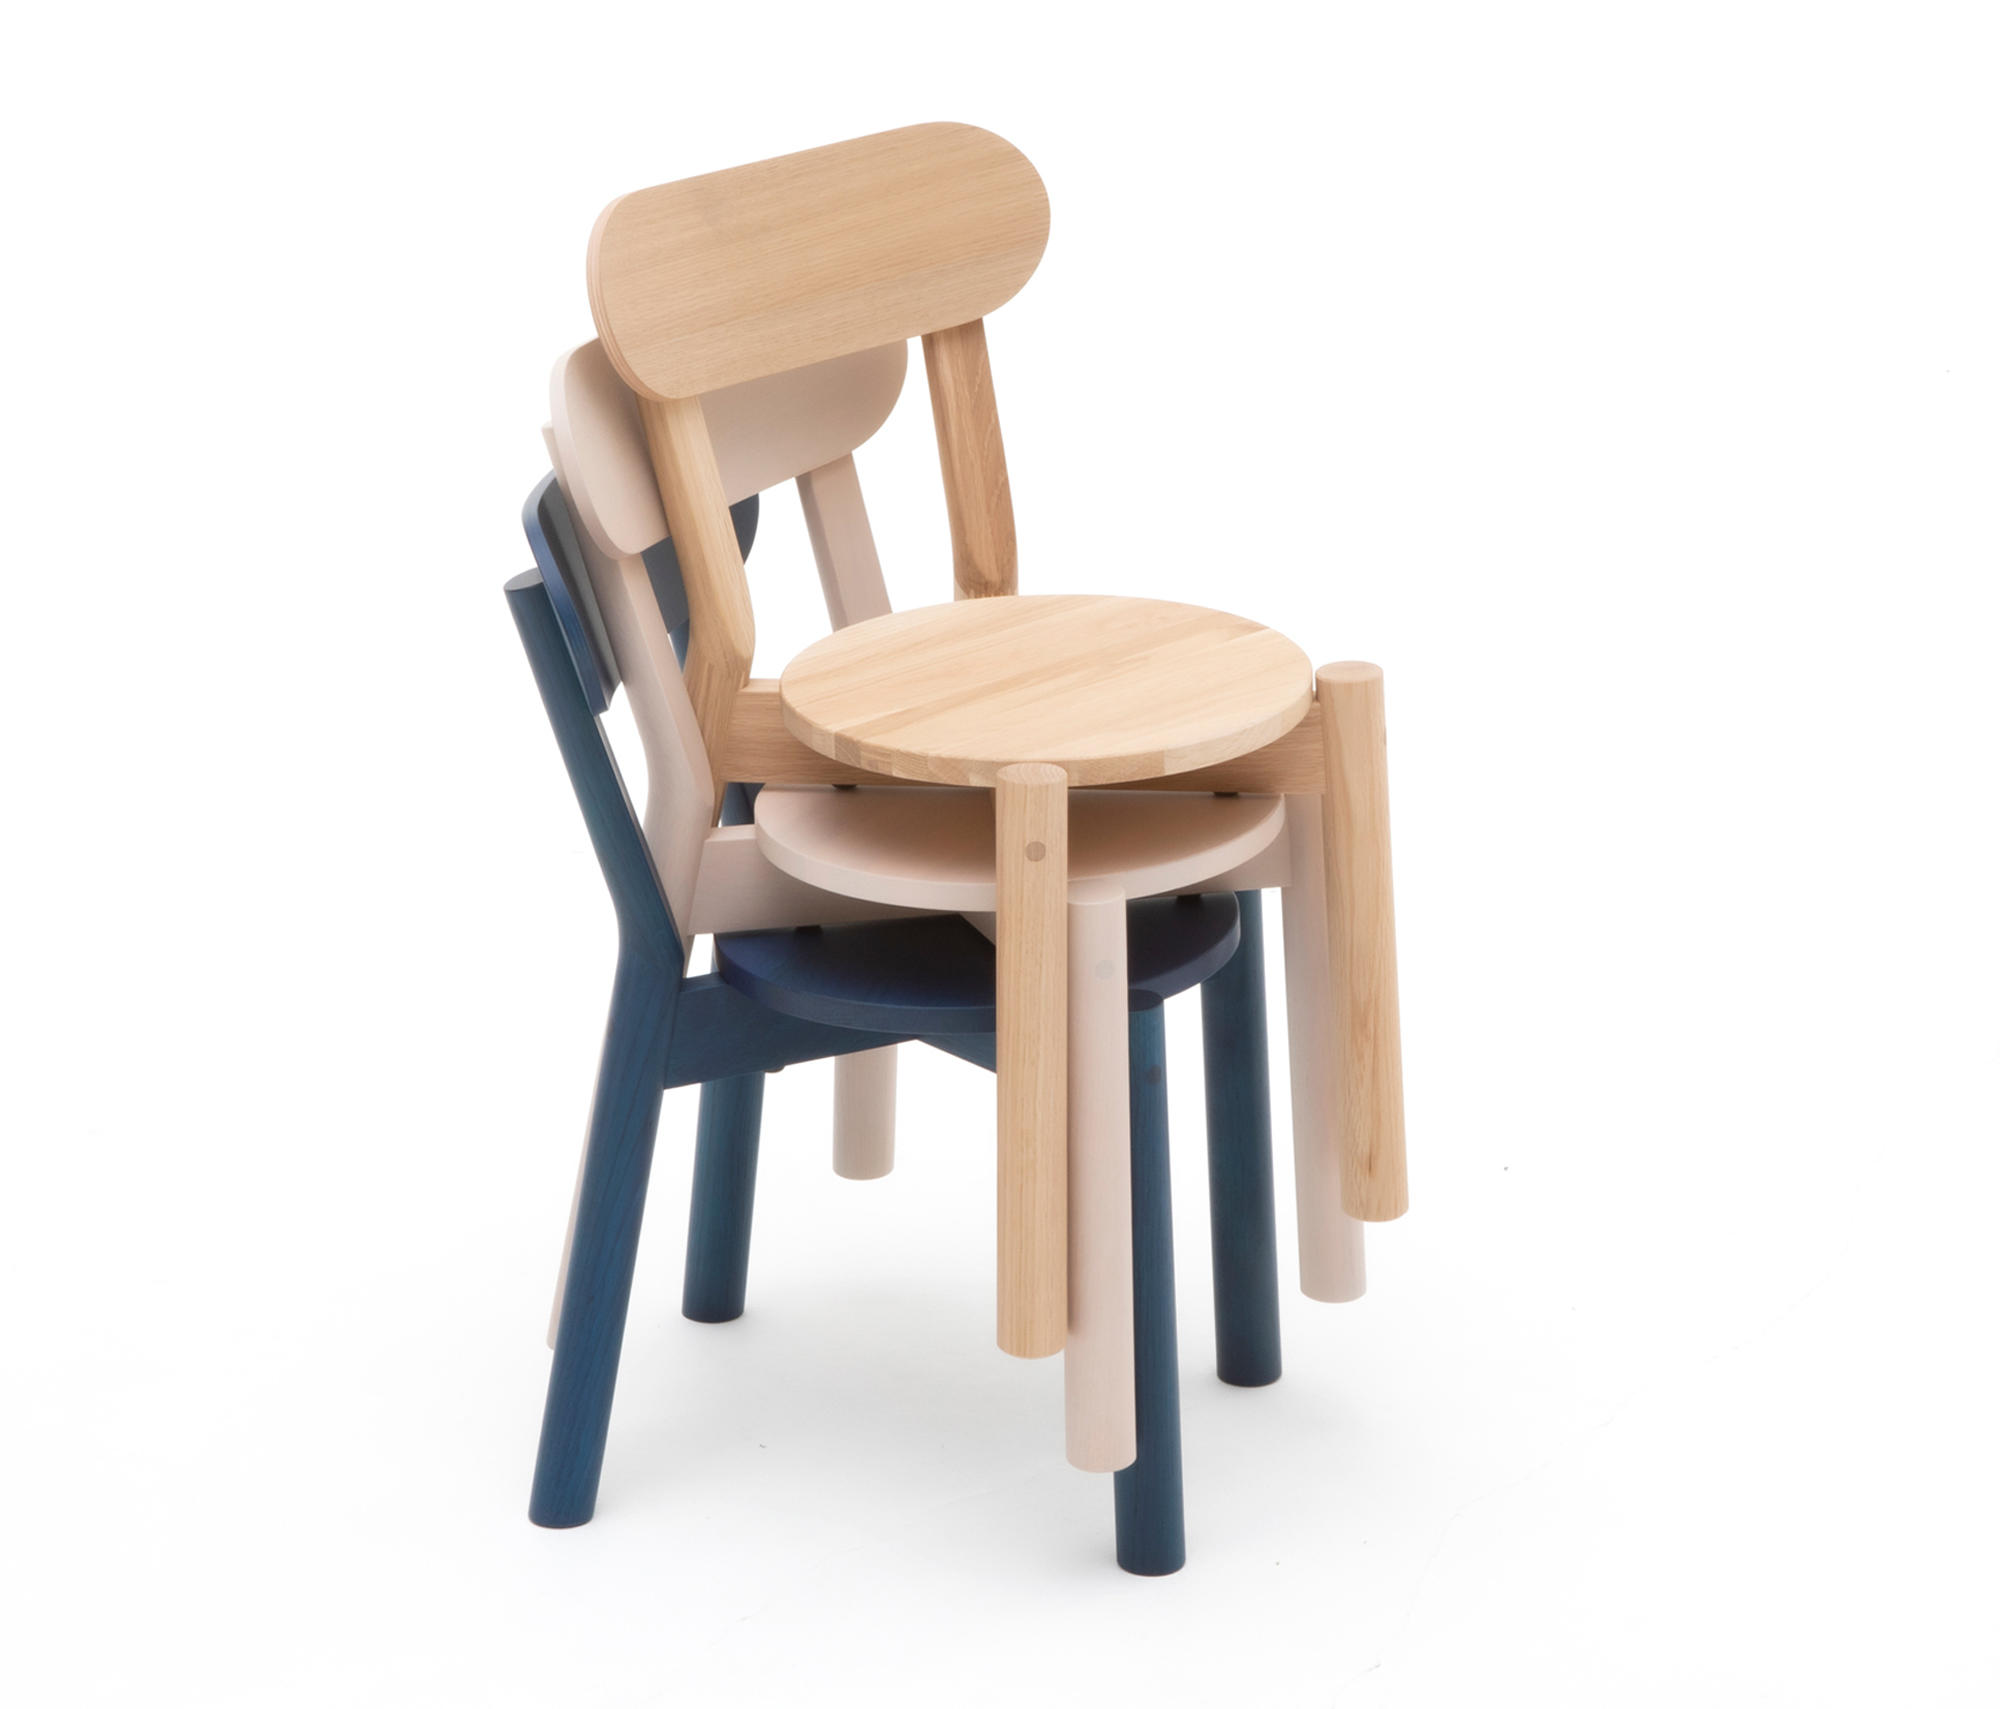 Castor Kids Chair & designer furniture | Architonic